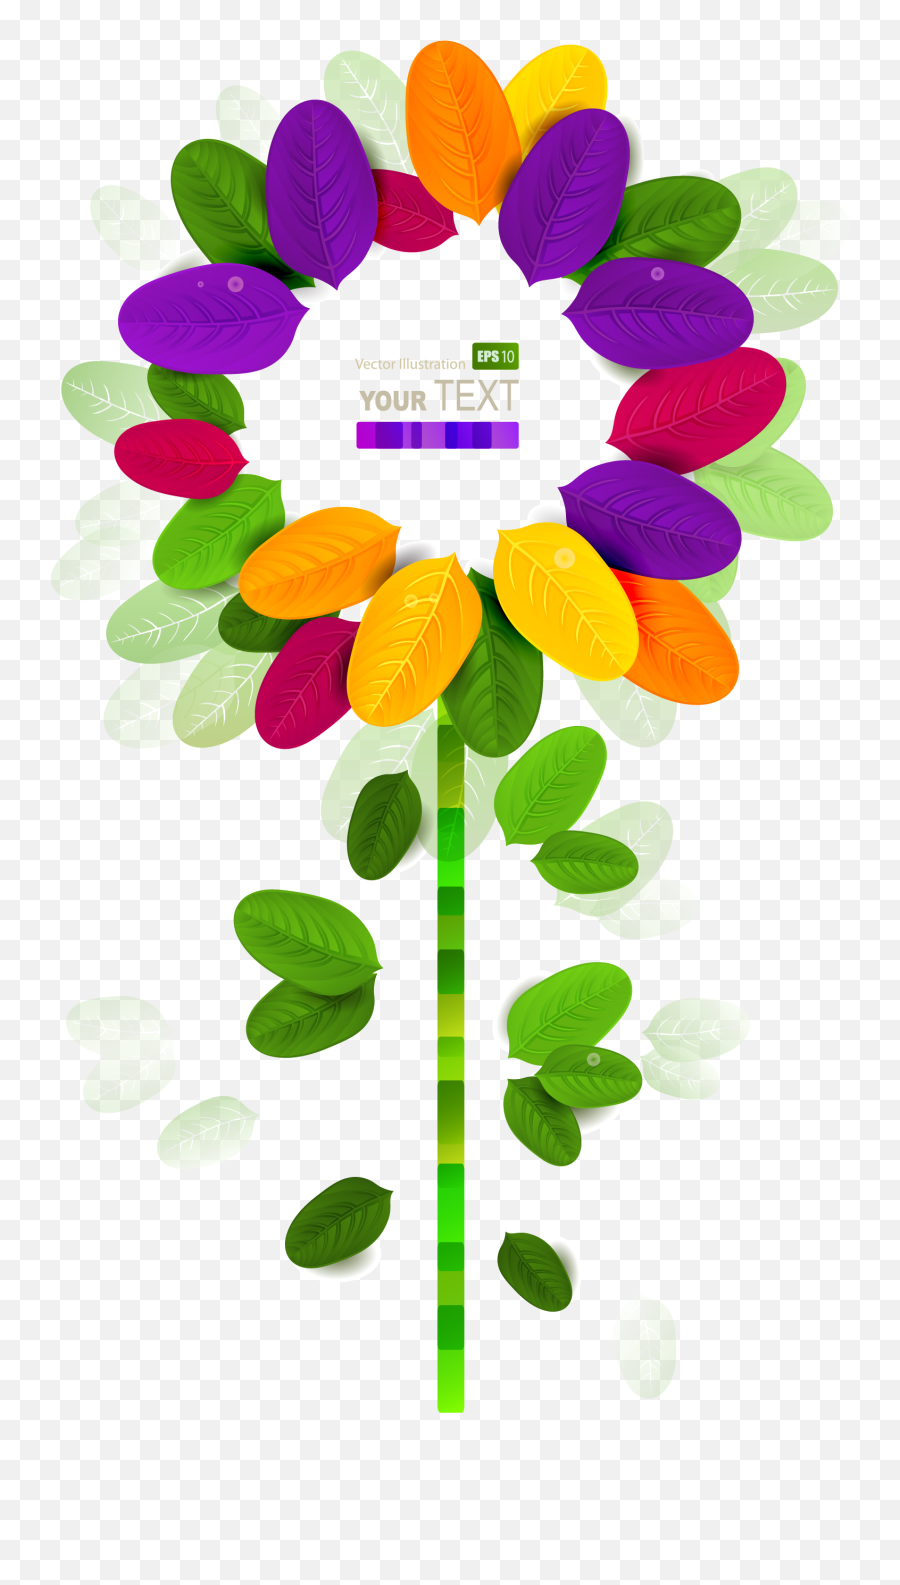 Flower Art Illustration - Colorful Flowers Download Png Illustration,Colorful Flowers Png